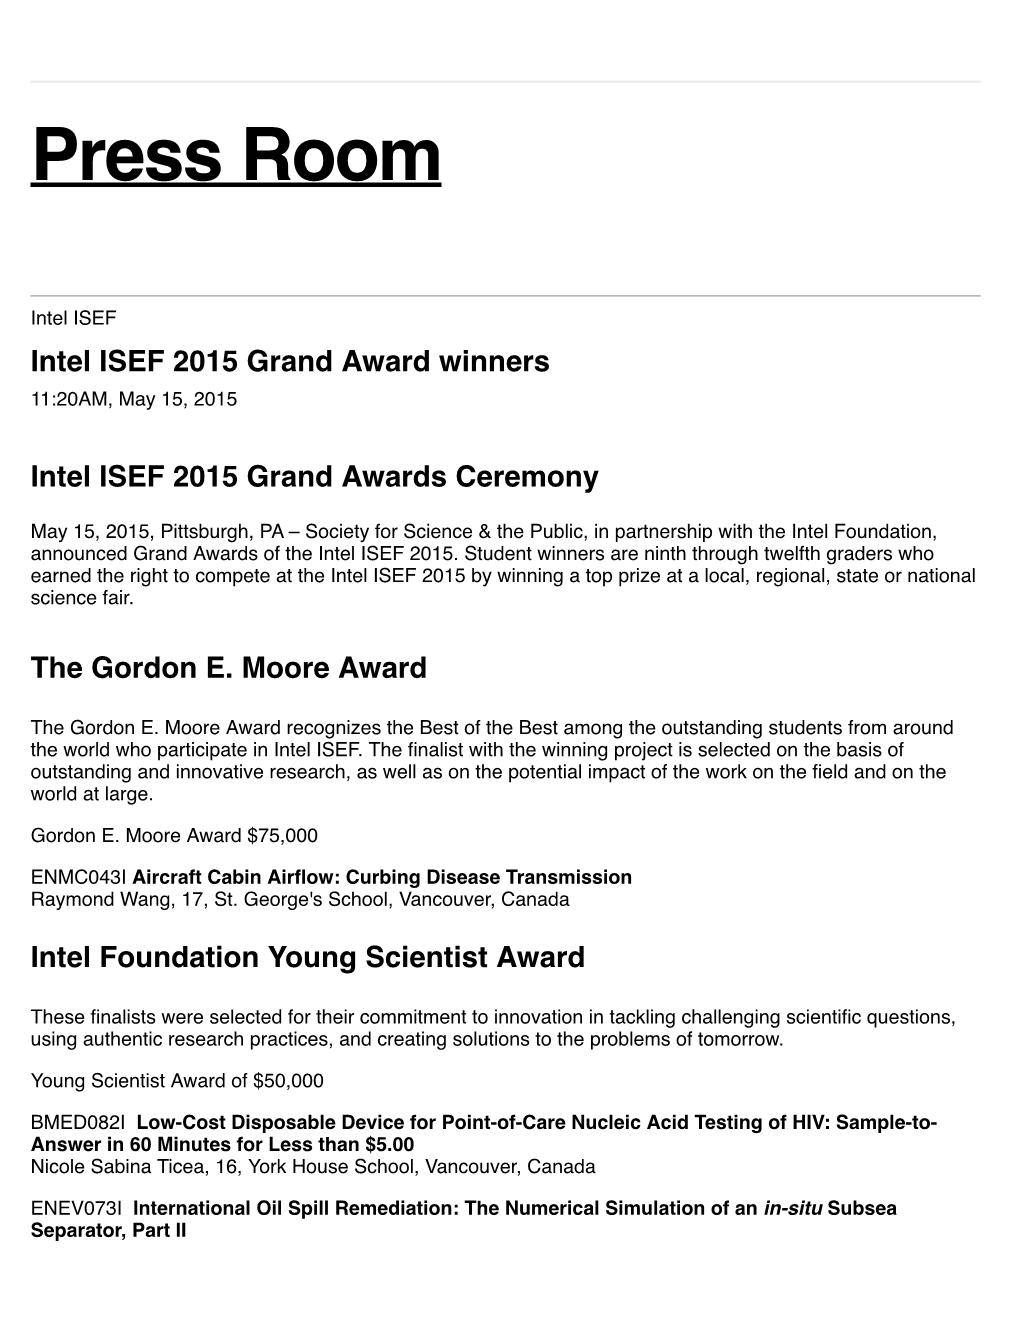 Intel ISEF 2015 Grand Award Winners 11:20AM, May 15, 2015